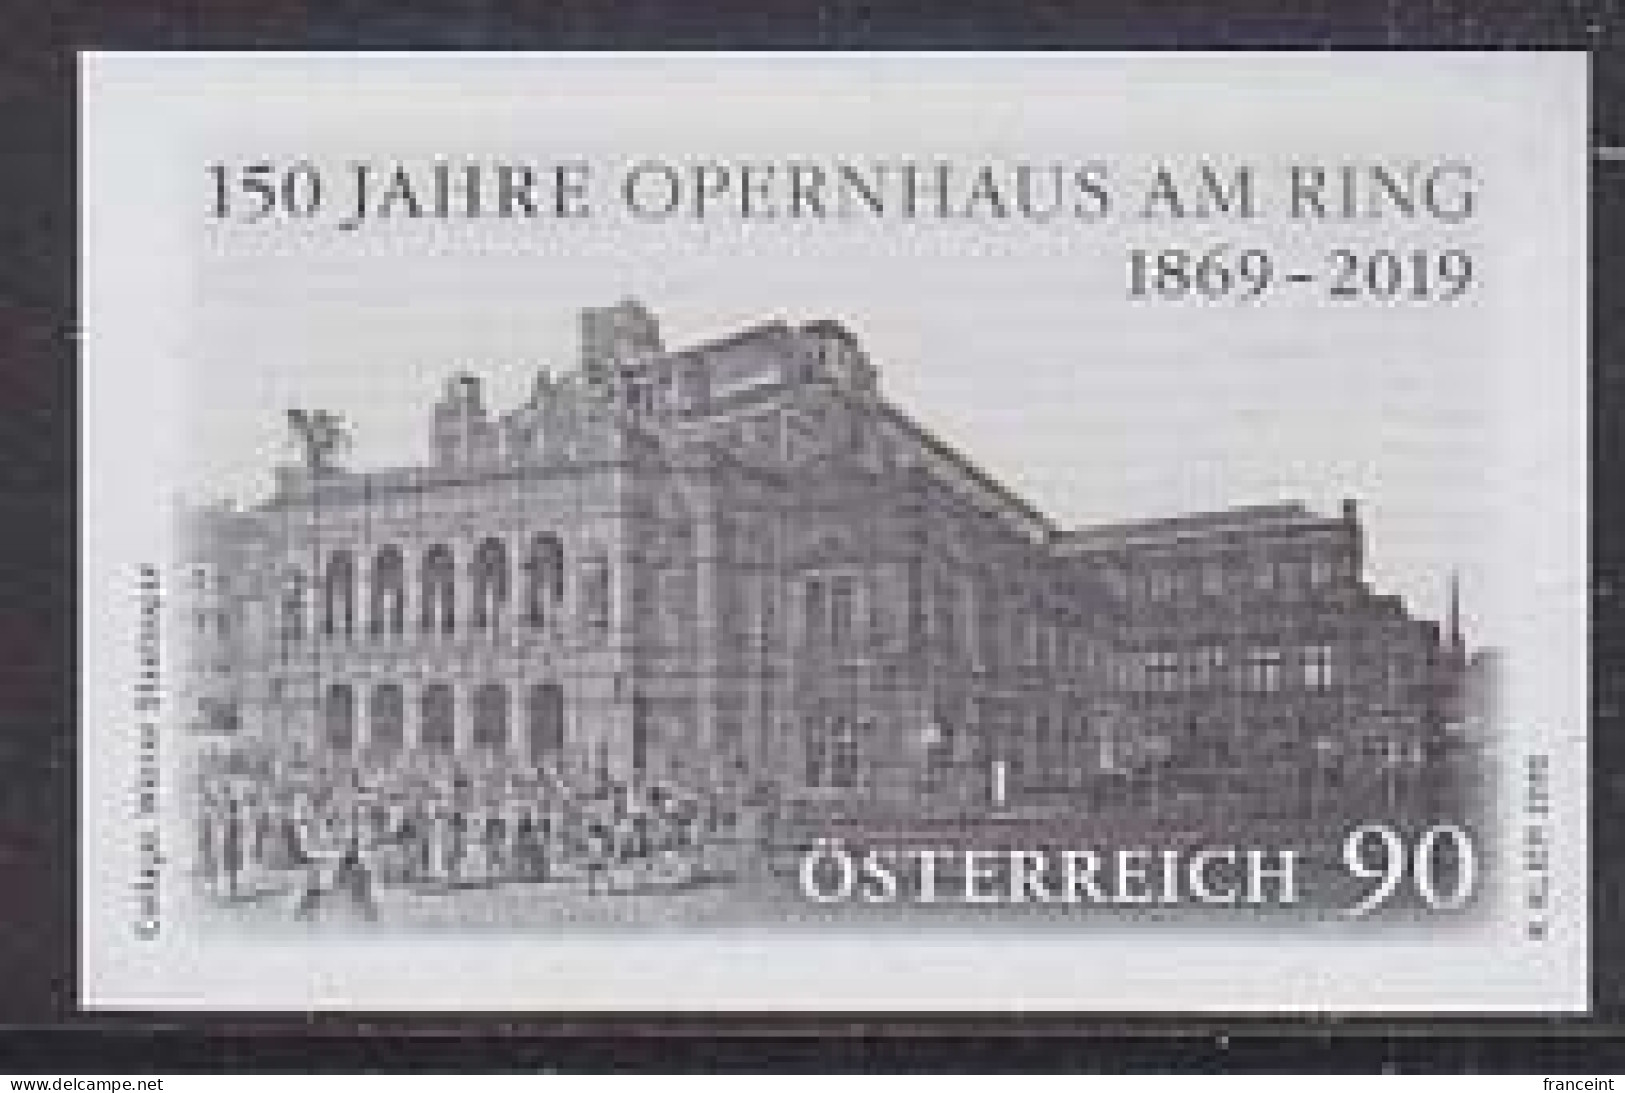 AUSTRIA(2019) Vienna Opera House. Black Print. - Prove & Ristampe